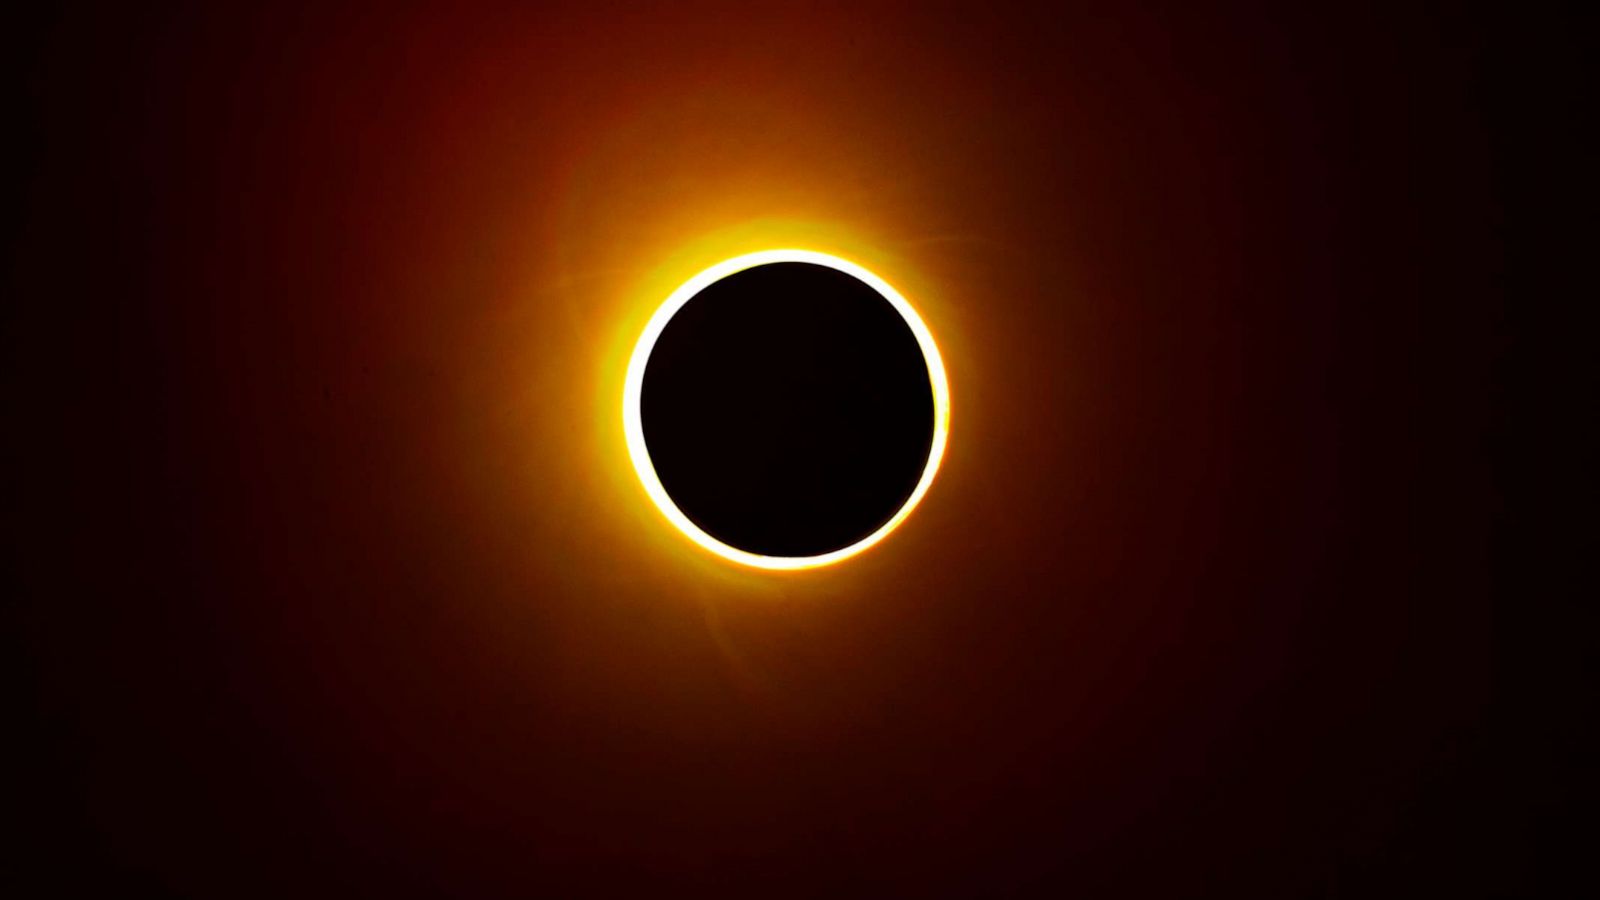 Live Stream For The 2014 Annular Solar Eclipse, AKA The 